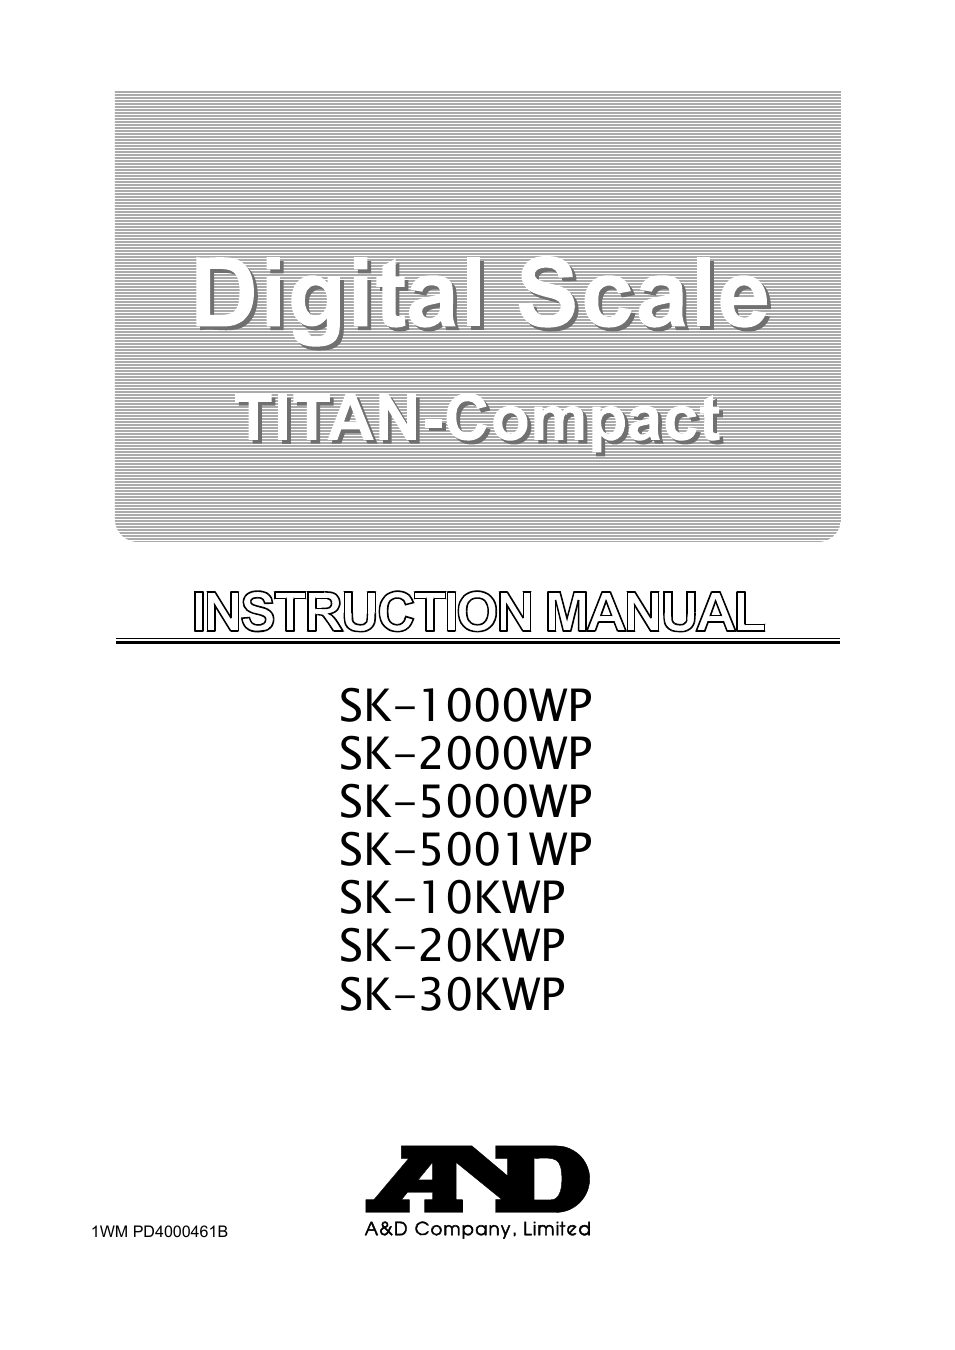 Digital Scale SK-5000WP